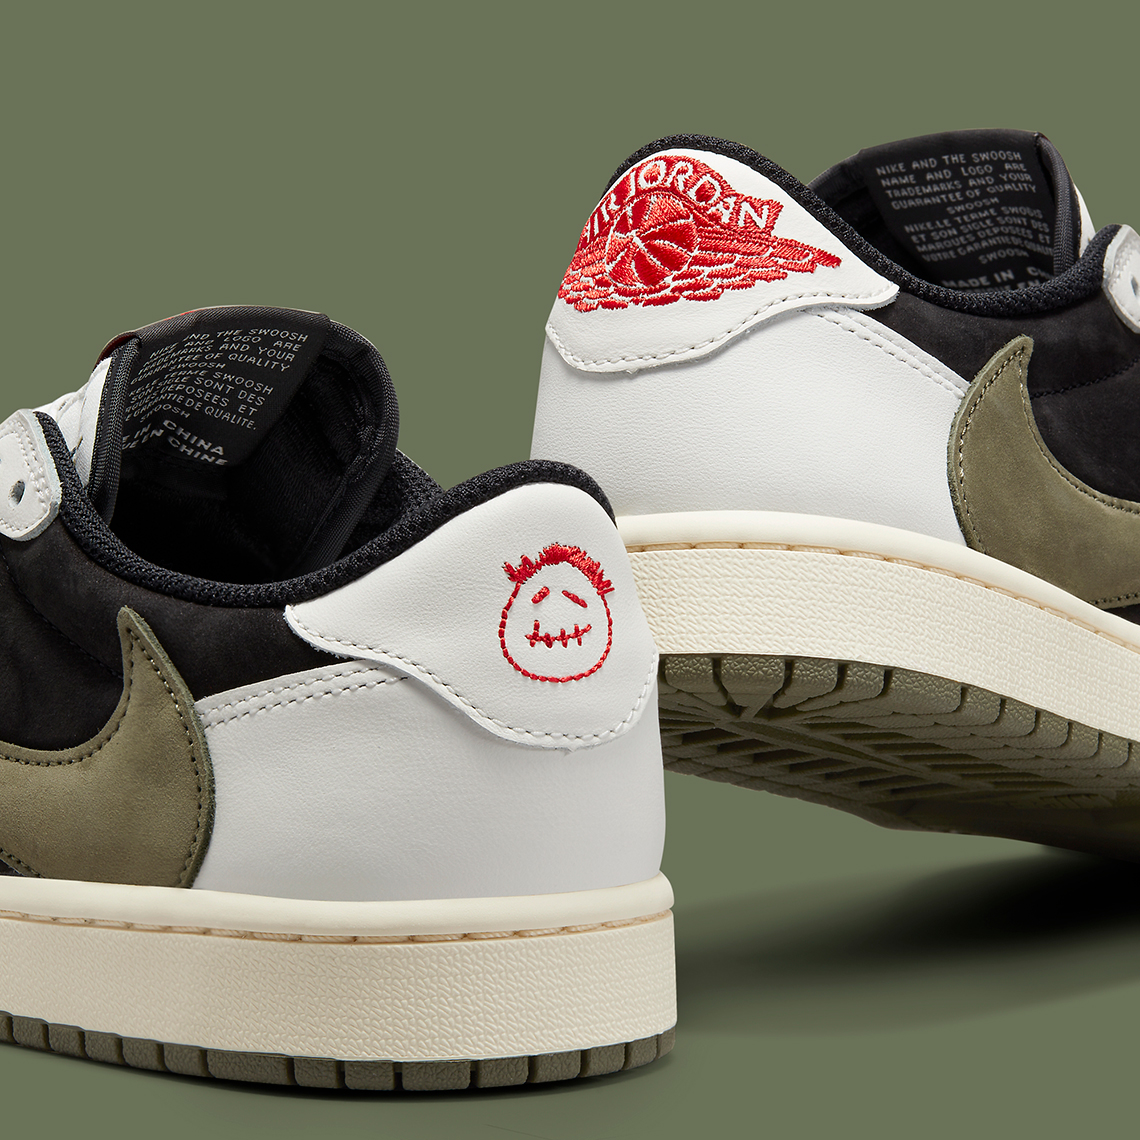 Jordan Brand Are Bringing Back 'Gatorade' Jays